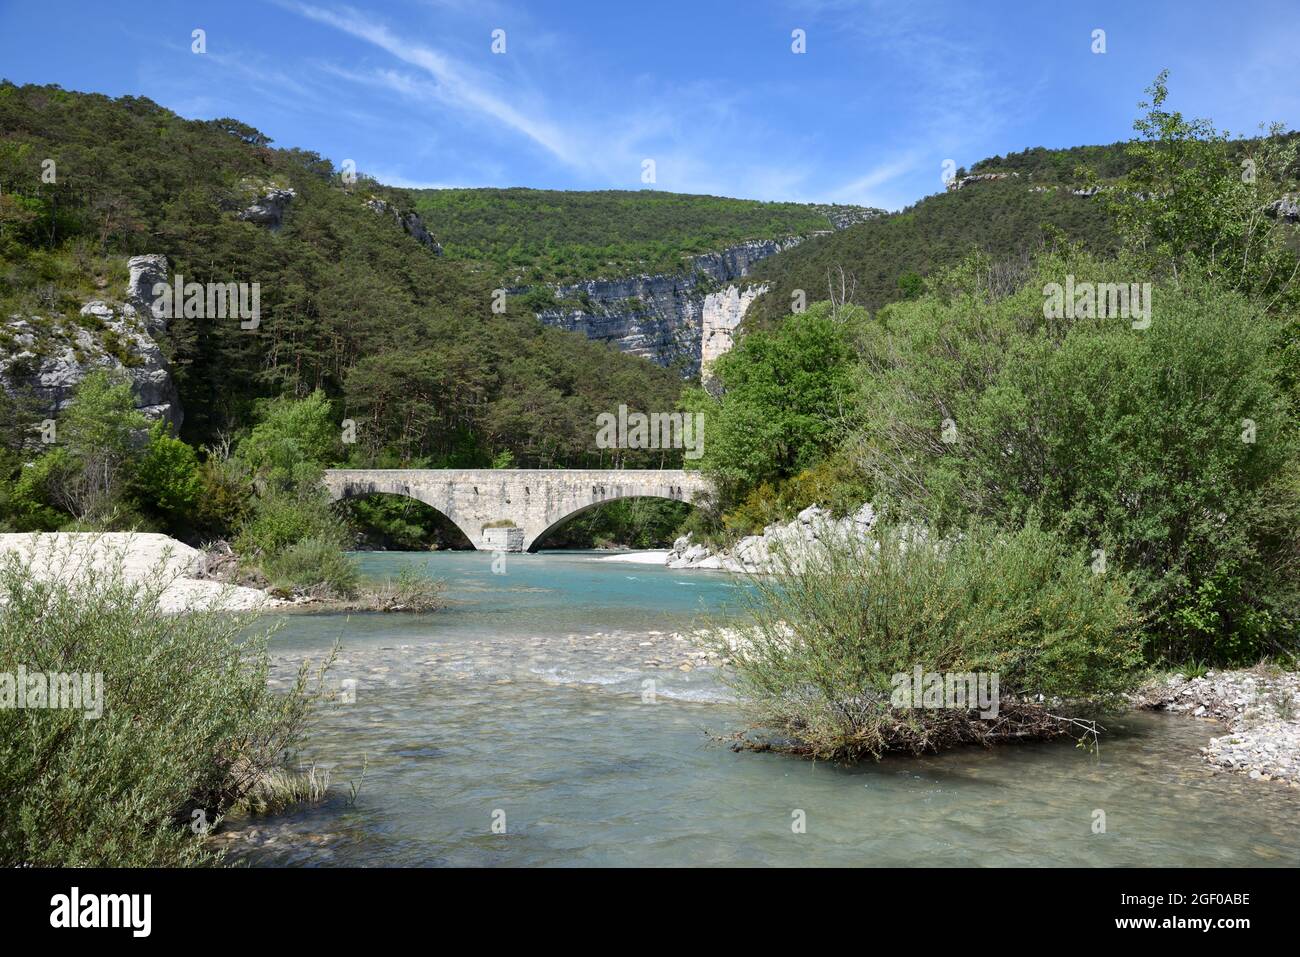 Historische Pont du Carajuan oder steinerne Carajuan-Brücke über den Fluss Verdon in der Nähe von Rougon Alpes-de-Haute-Provence Provence Frankreich Stockfoto